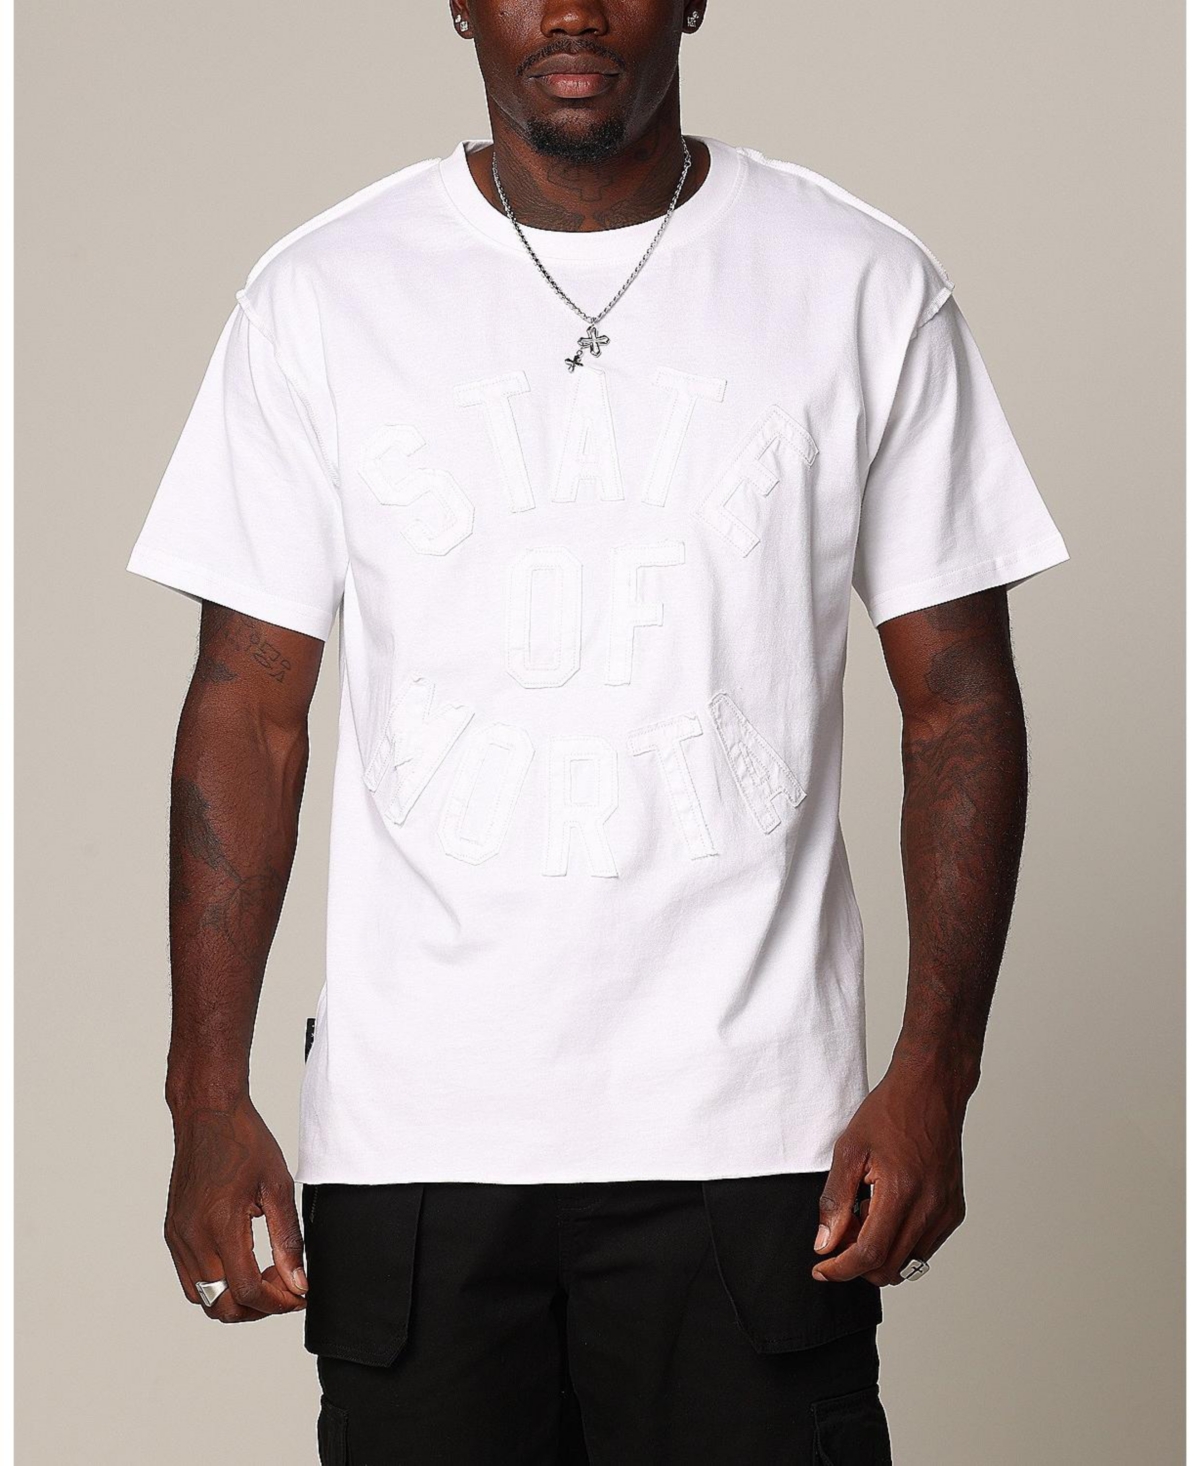 Men's State Of Morta Applique T-Shirt - White